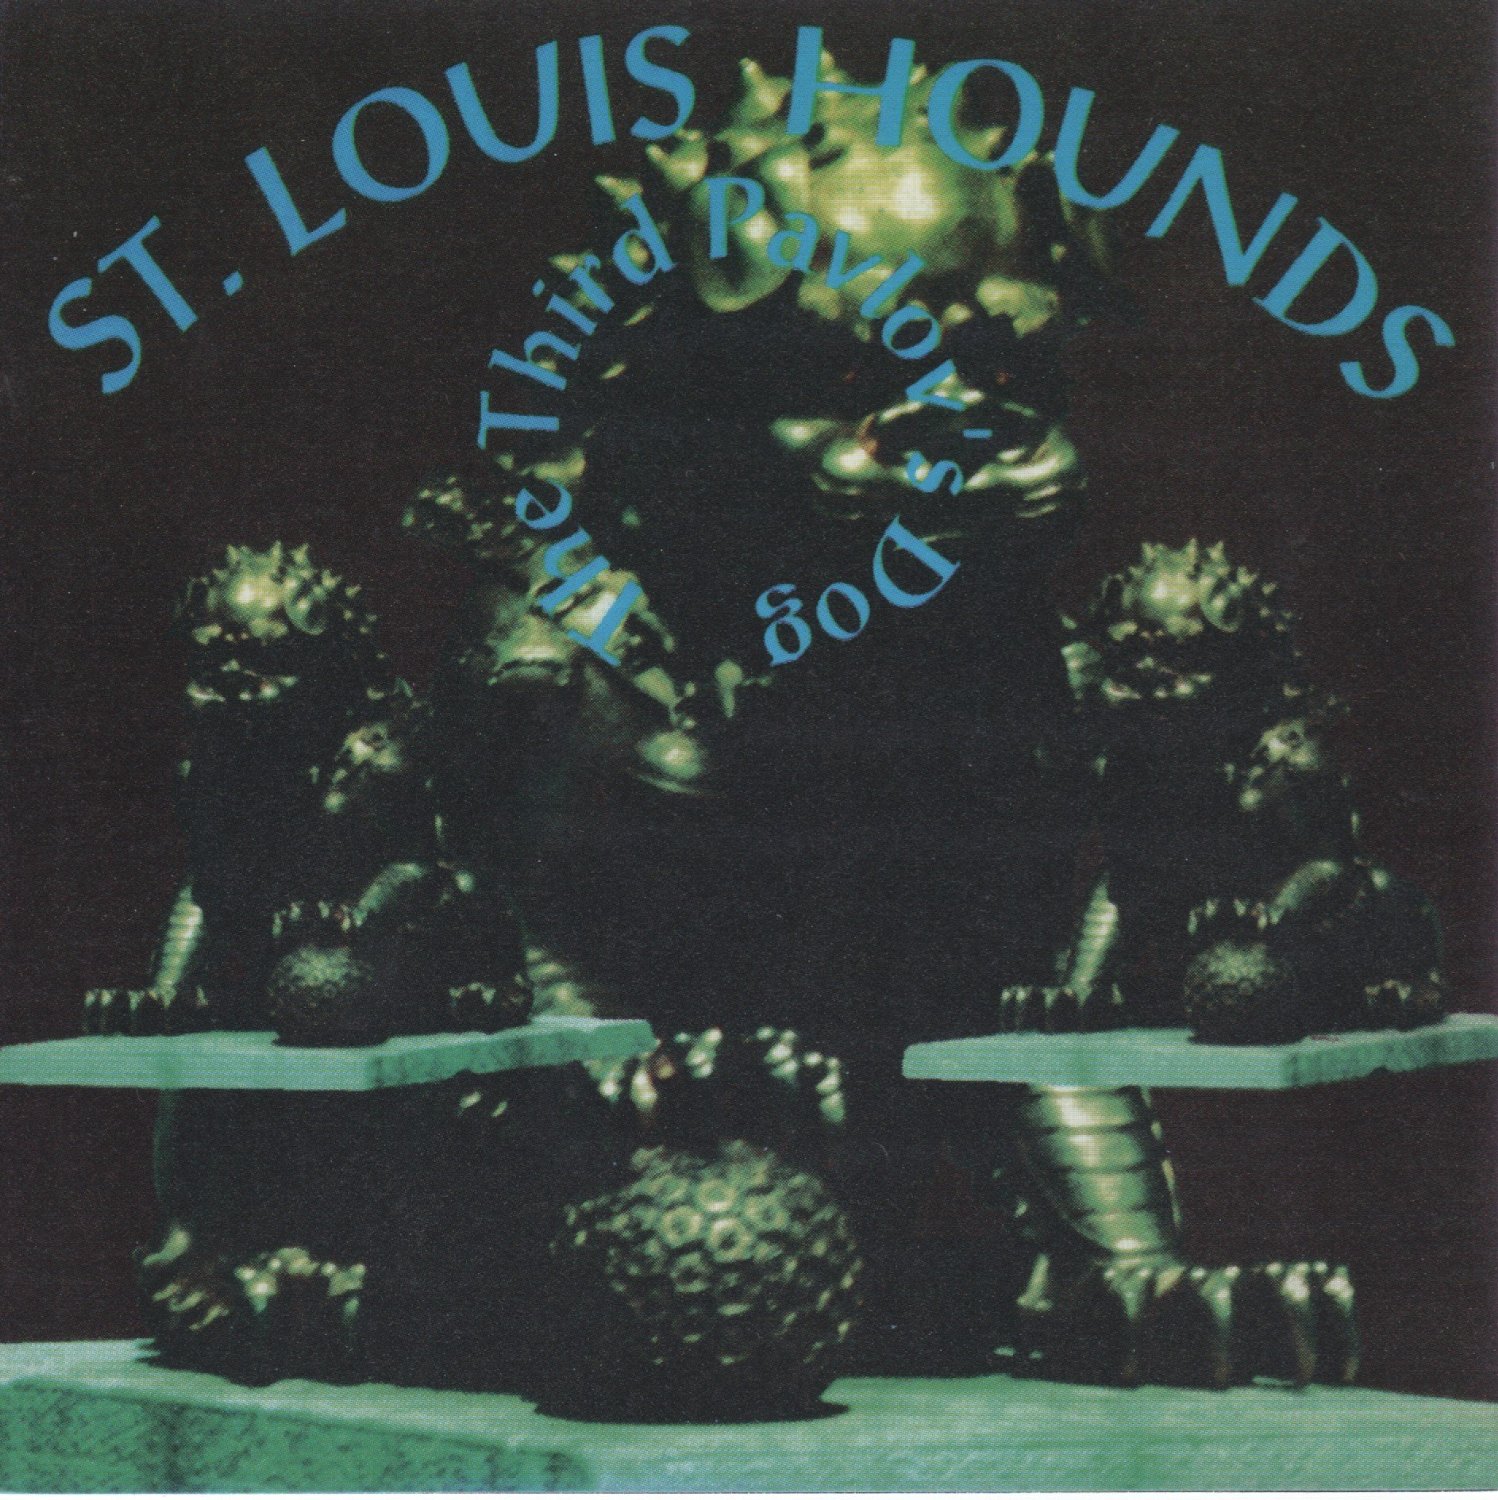 Pavlov's Dog — St. Louis Hounds